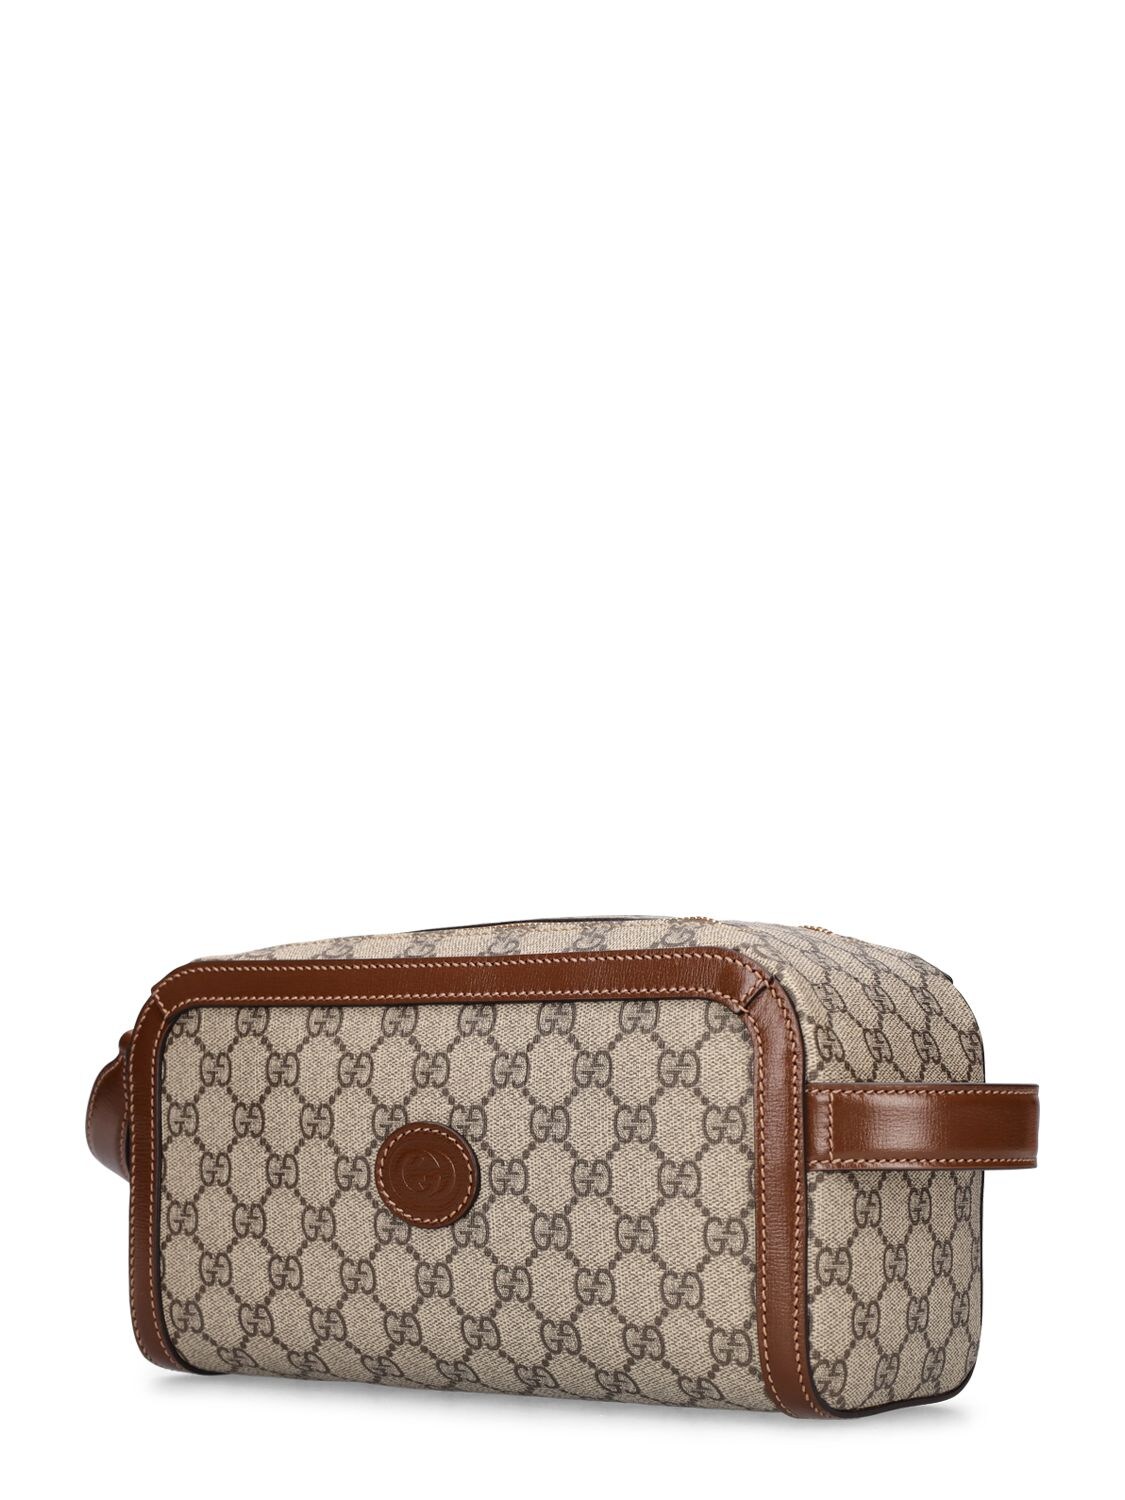 Gucci GG Supreme toiletry case  Toiletry bag women, Mens toiletry bag,  Designer travel bags